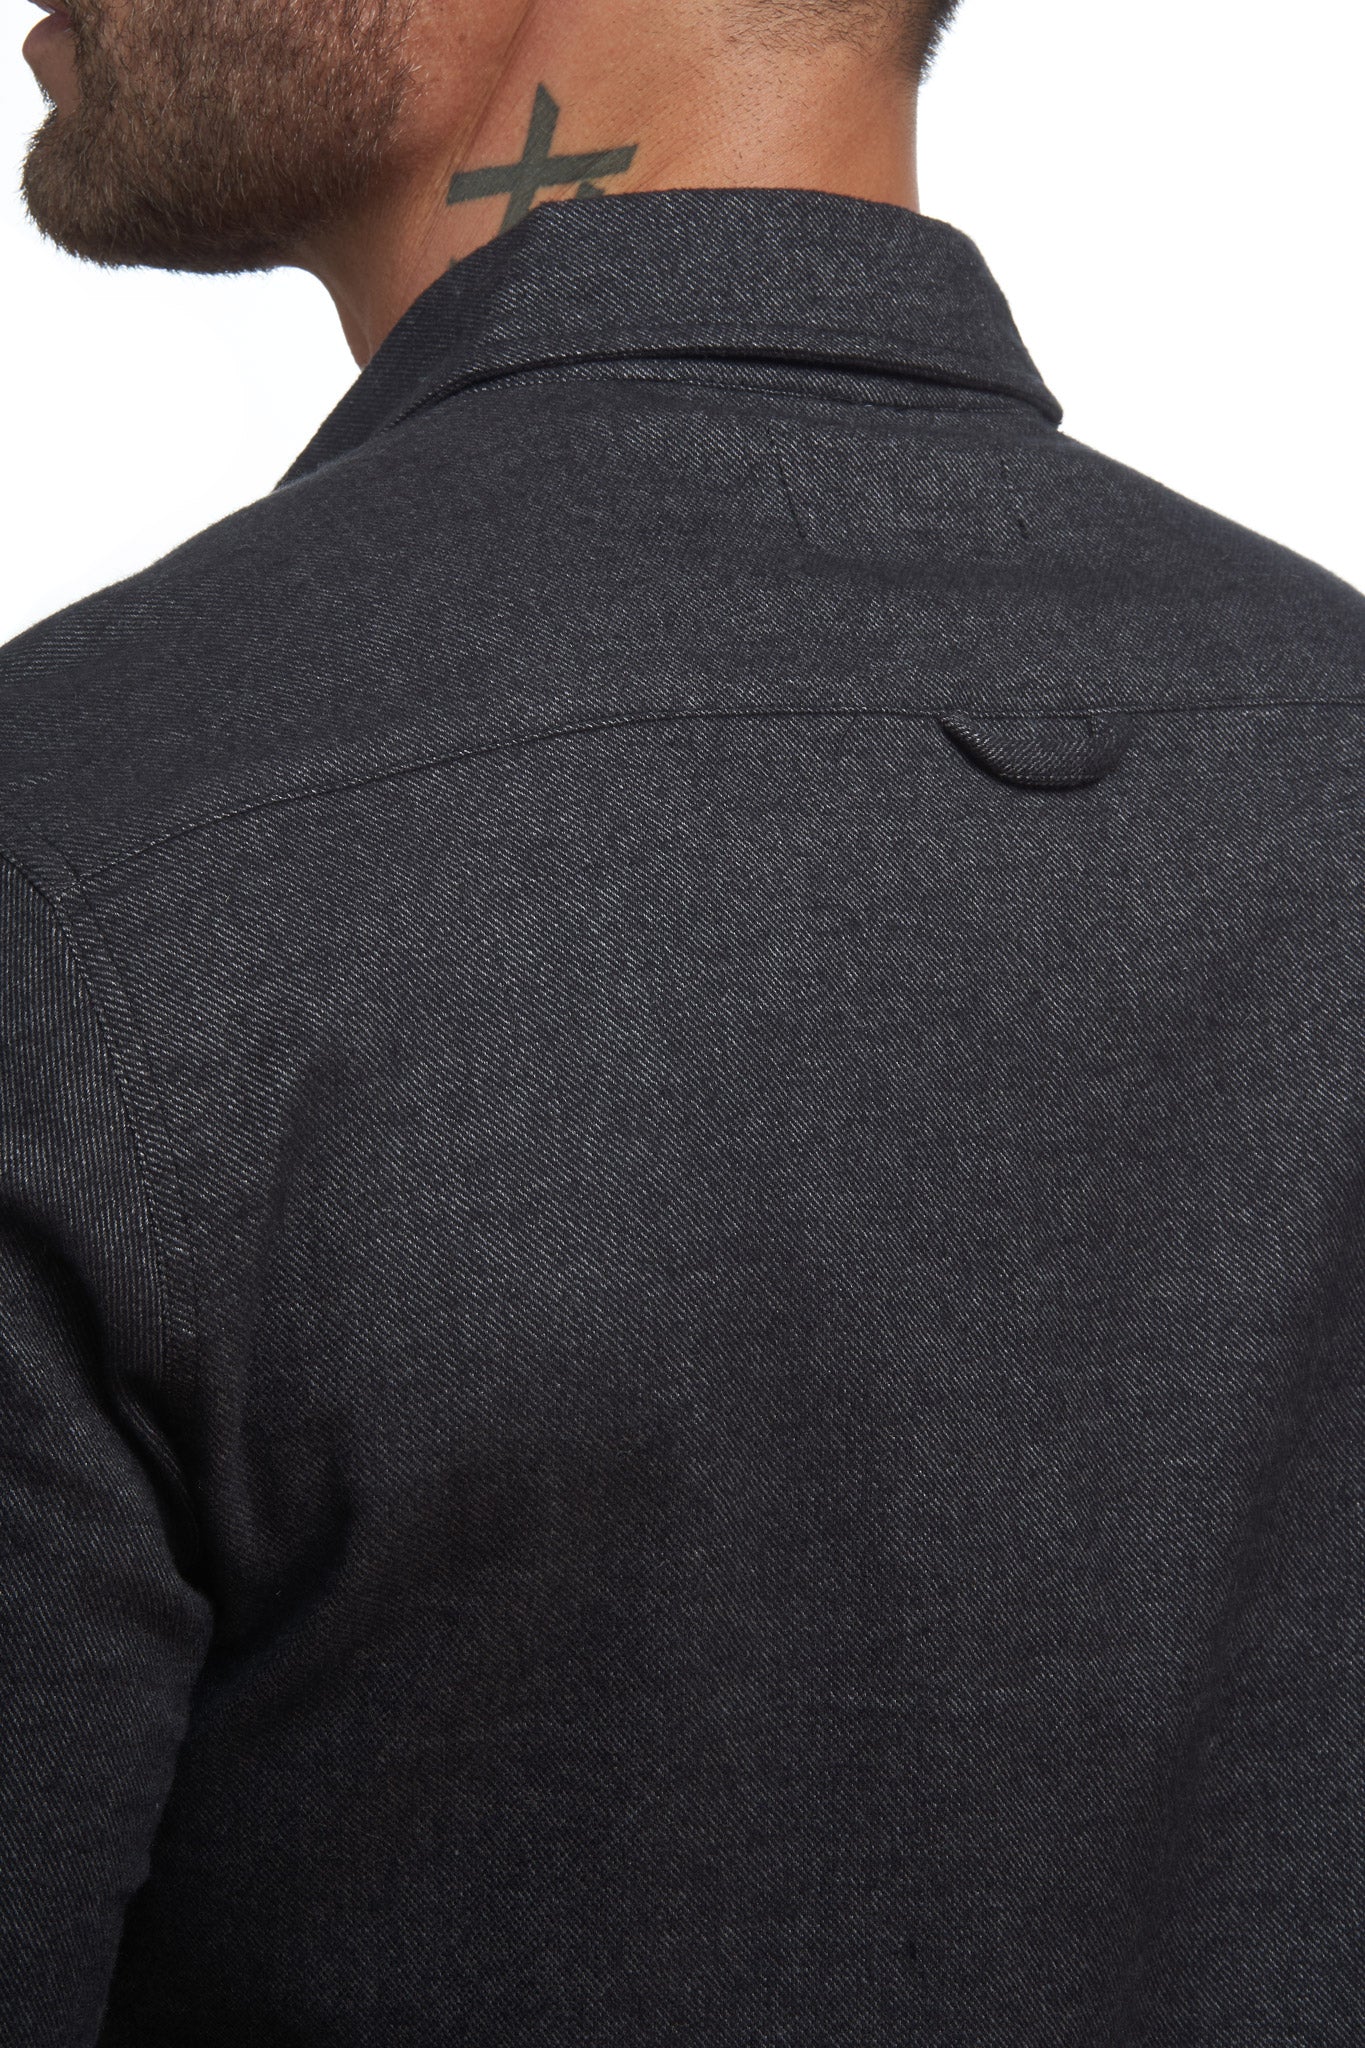 The Untucked Tailored SLIM Fit Button-Up Shirt (Runs Small) - WESTON JON BOUCHÉR